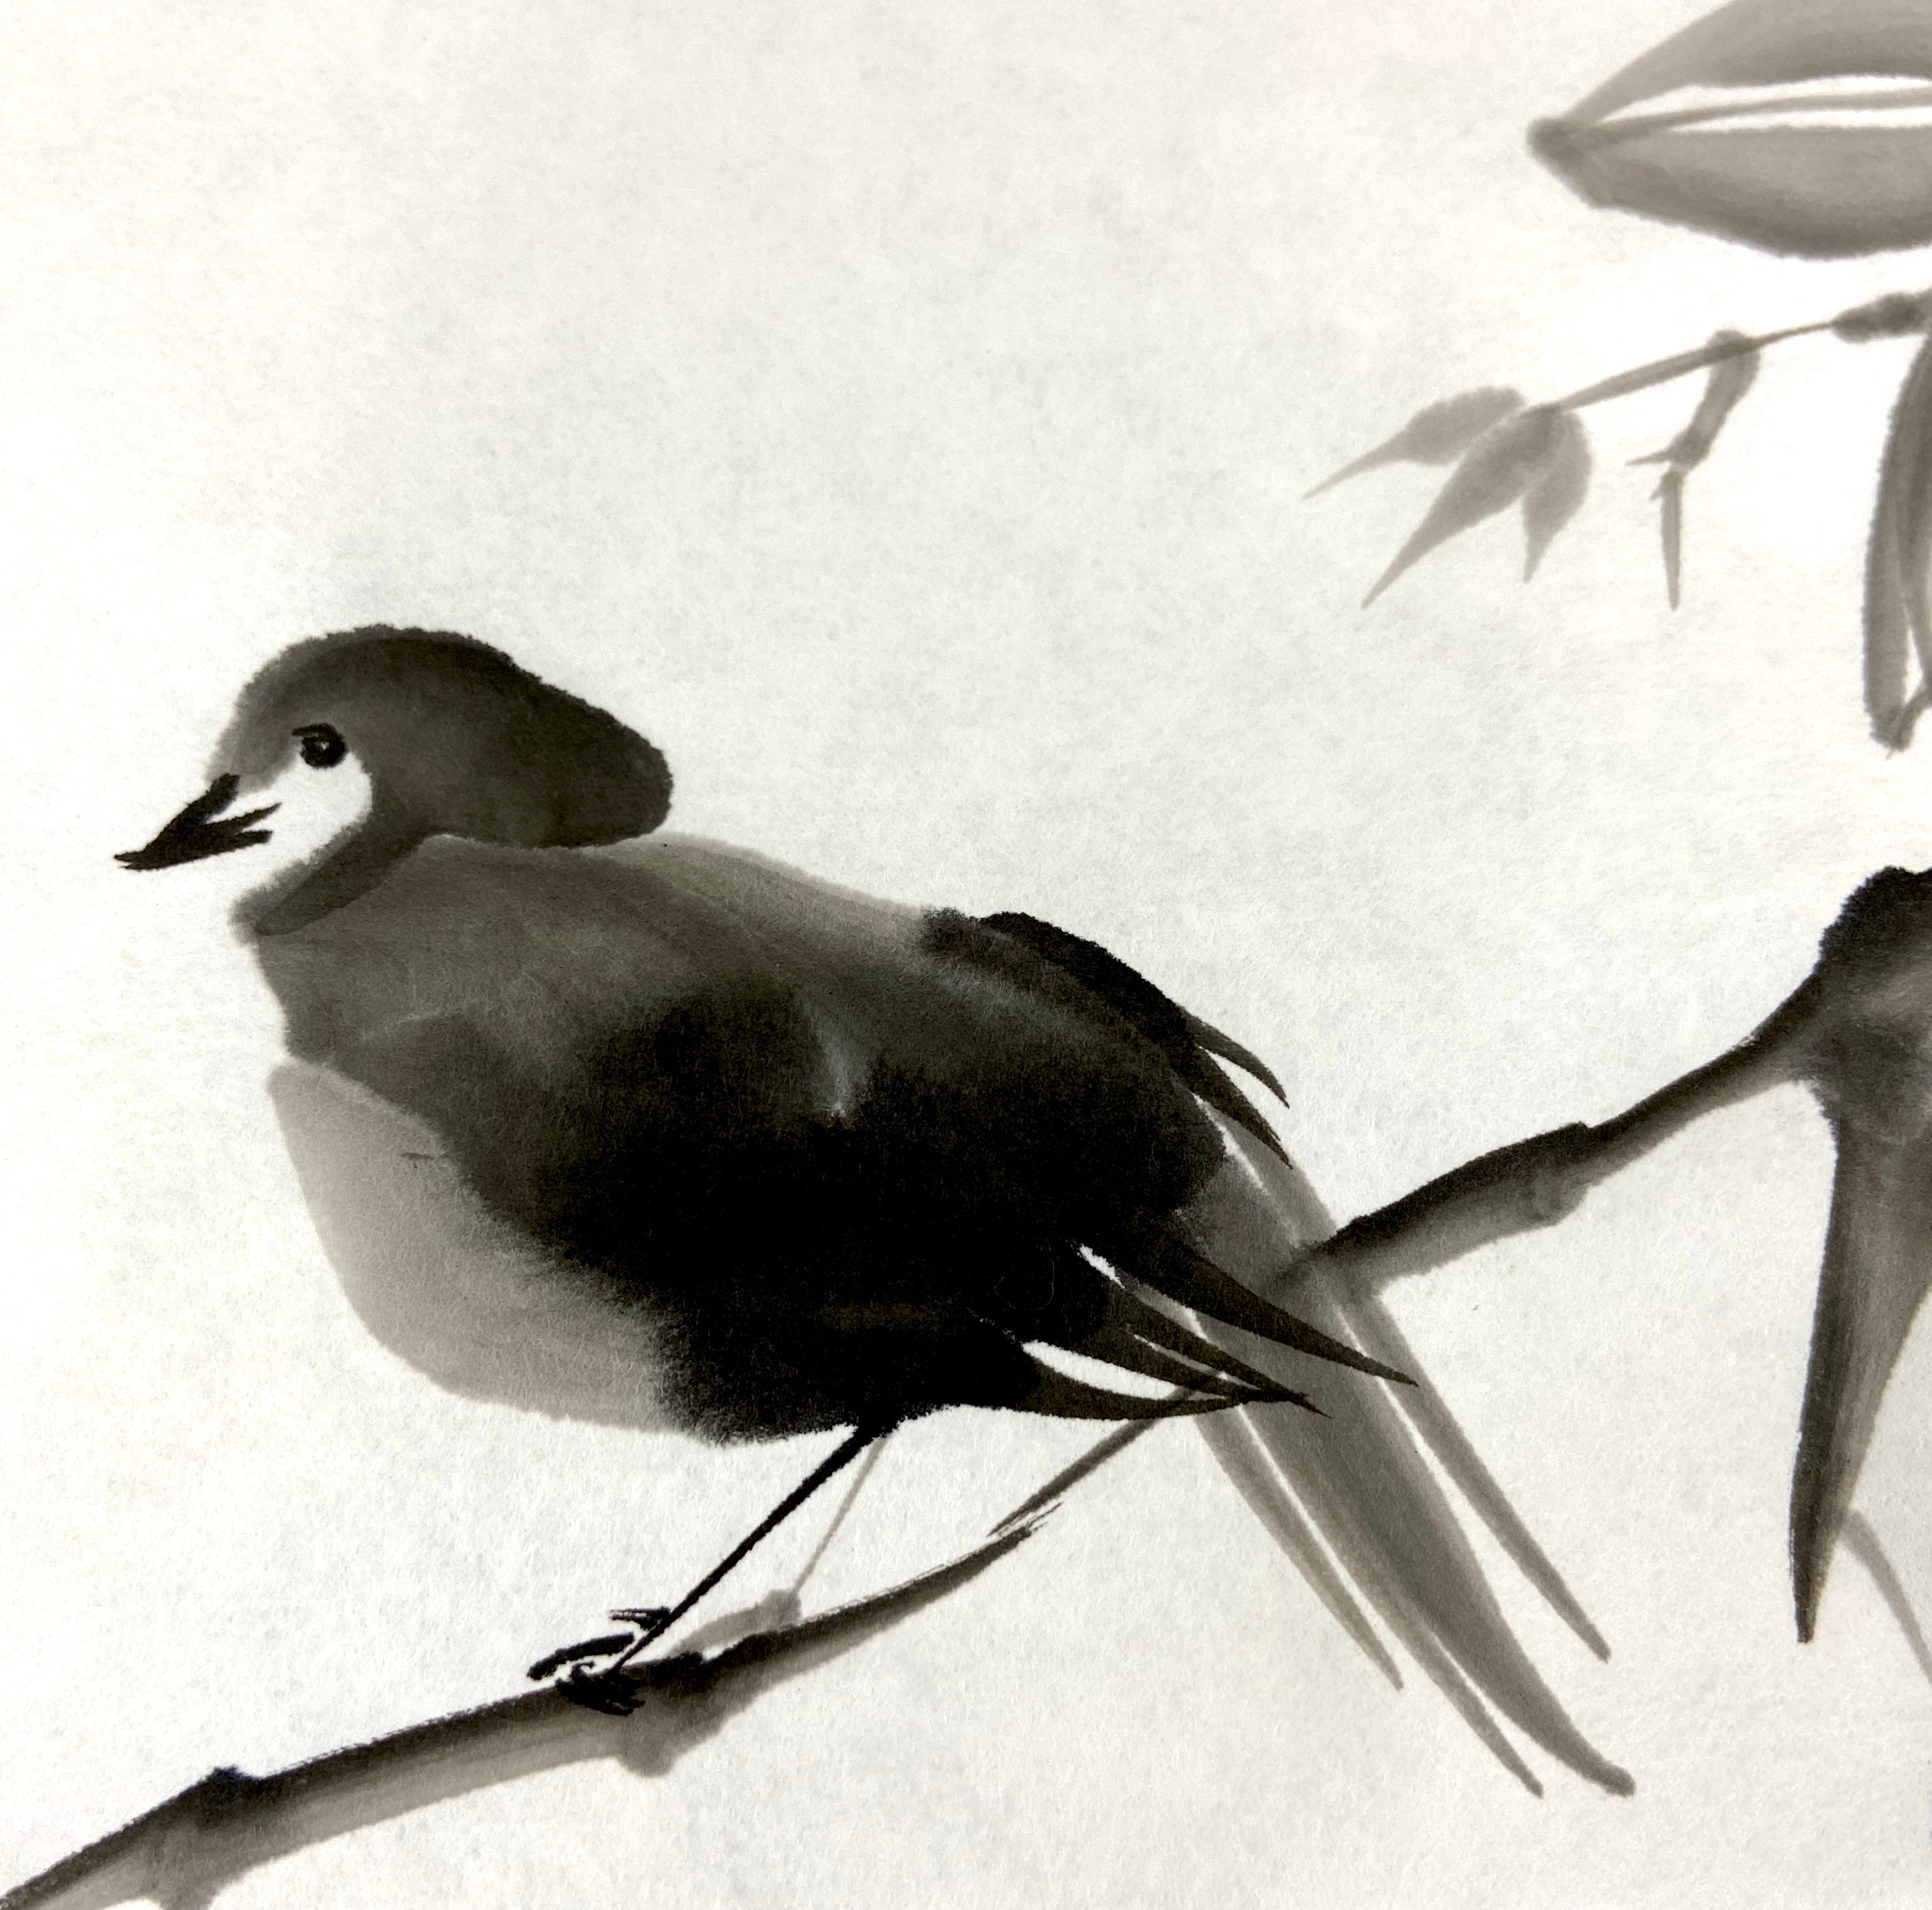 Yasutomo Sumi Ink - Black Shellac – ARCH Art Supplies